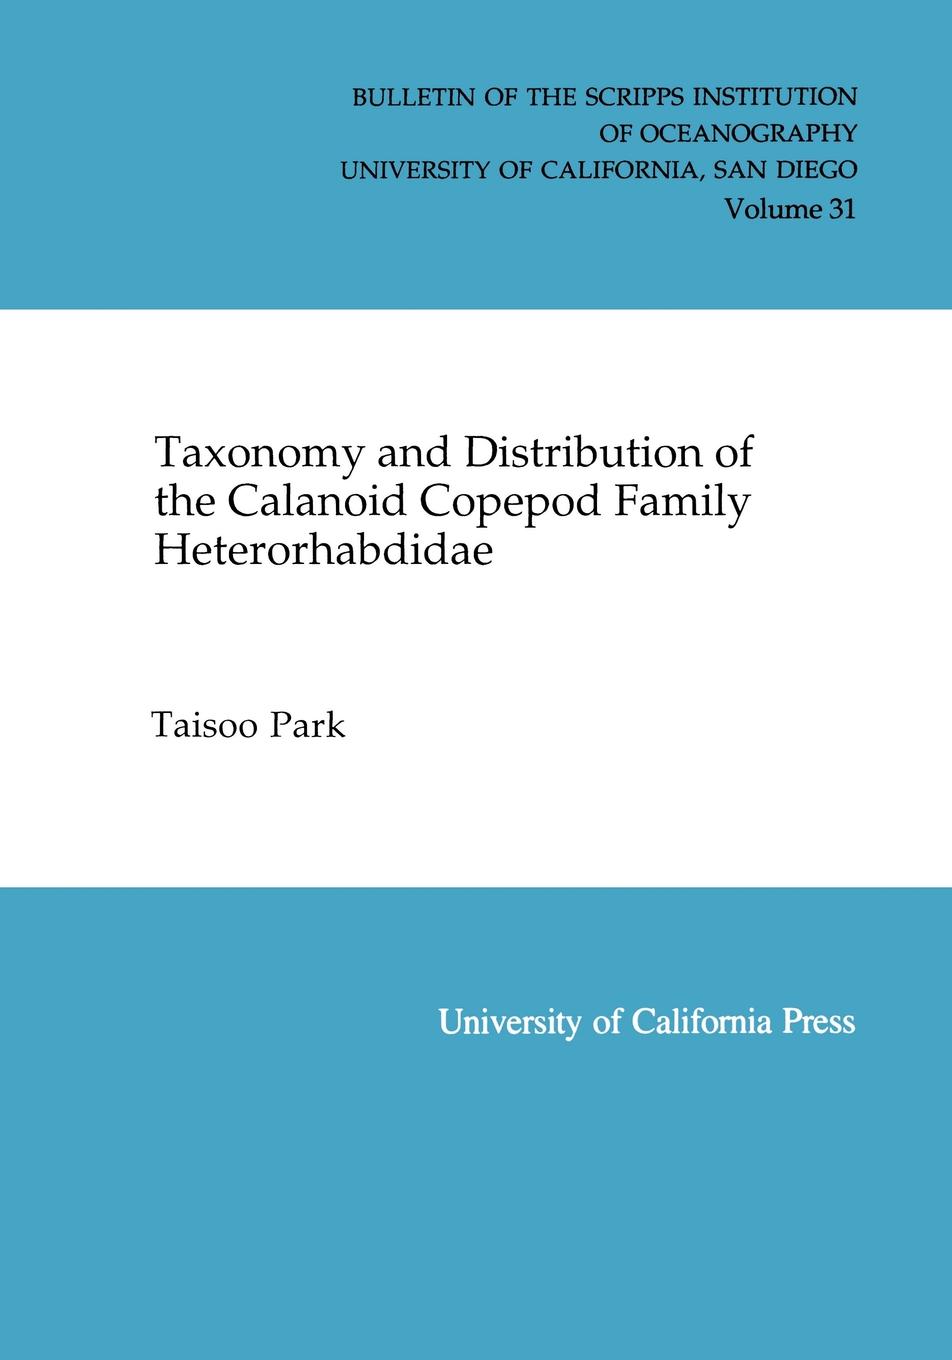 Taxonomy and Distribution of the Calanoid Copepod Family Heterorhabdidae - Taisoo Park